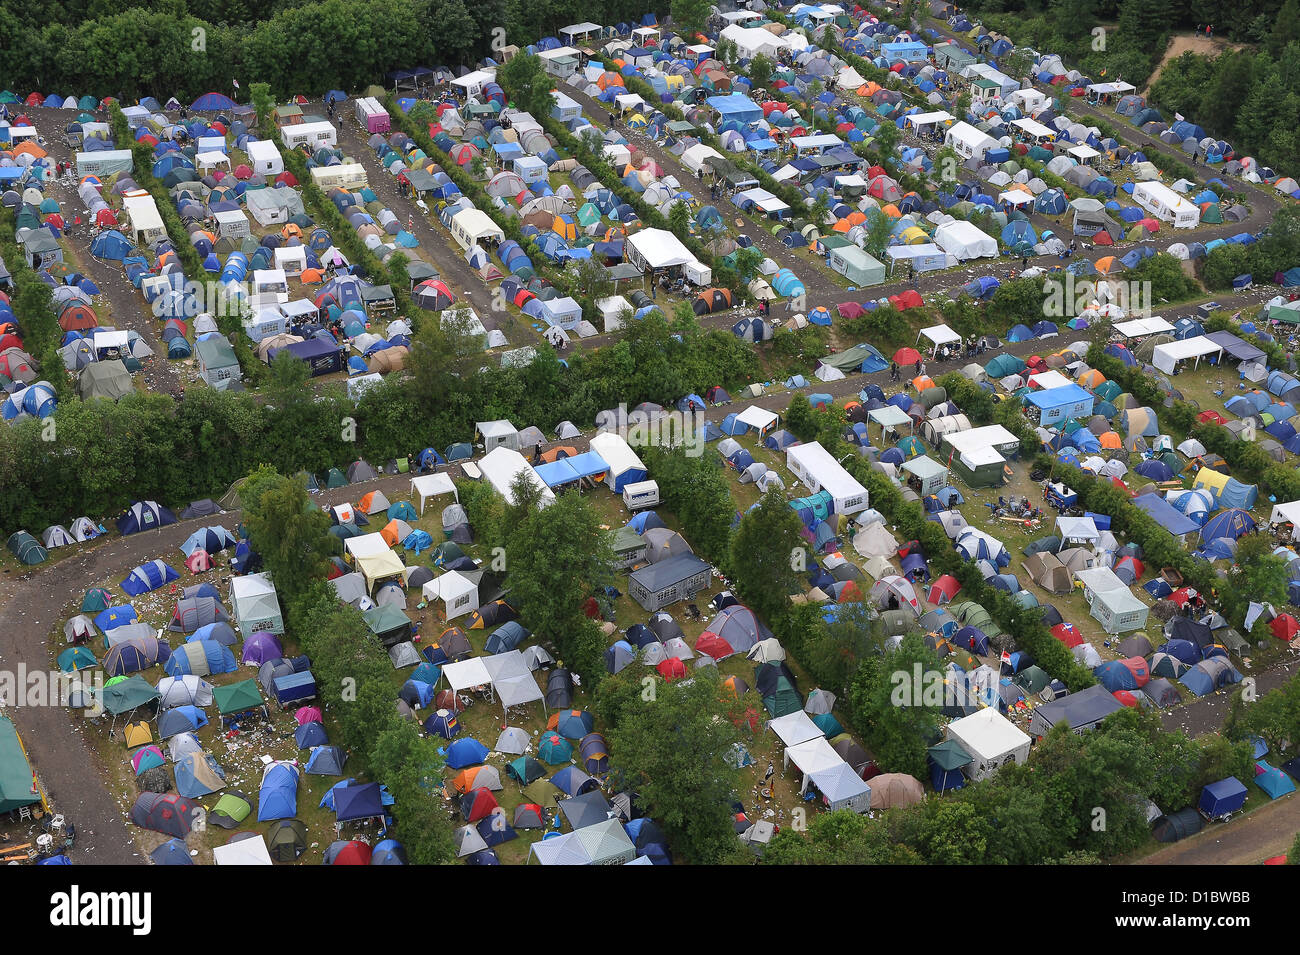 Verloren Immigratie uitspraak Tents festival aerial hi-res stock photography and images - Alamy